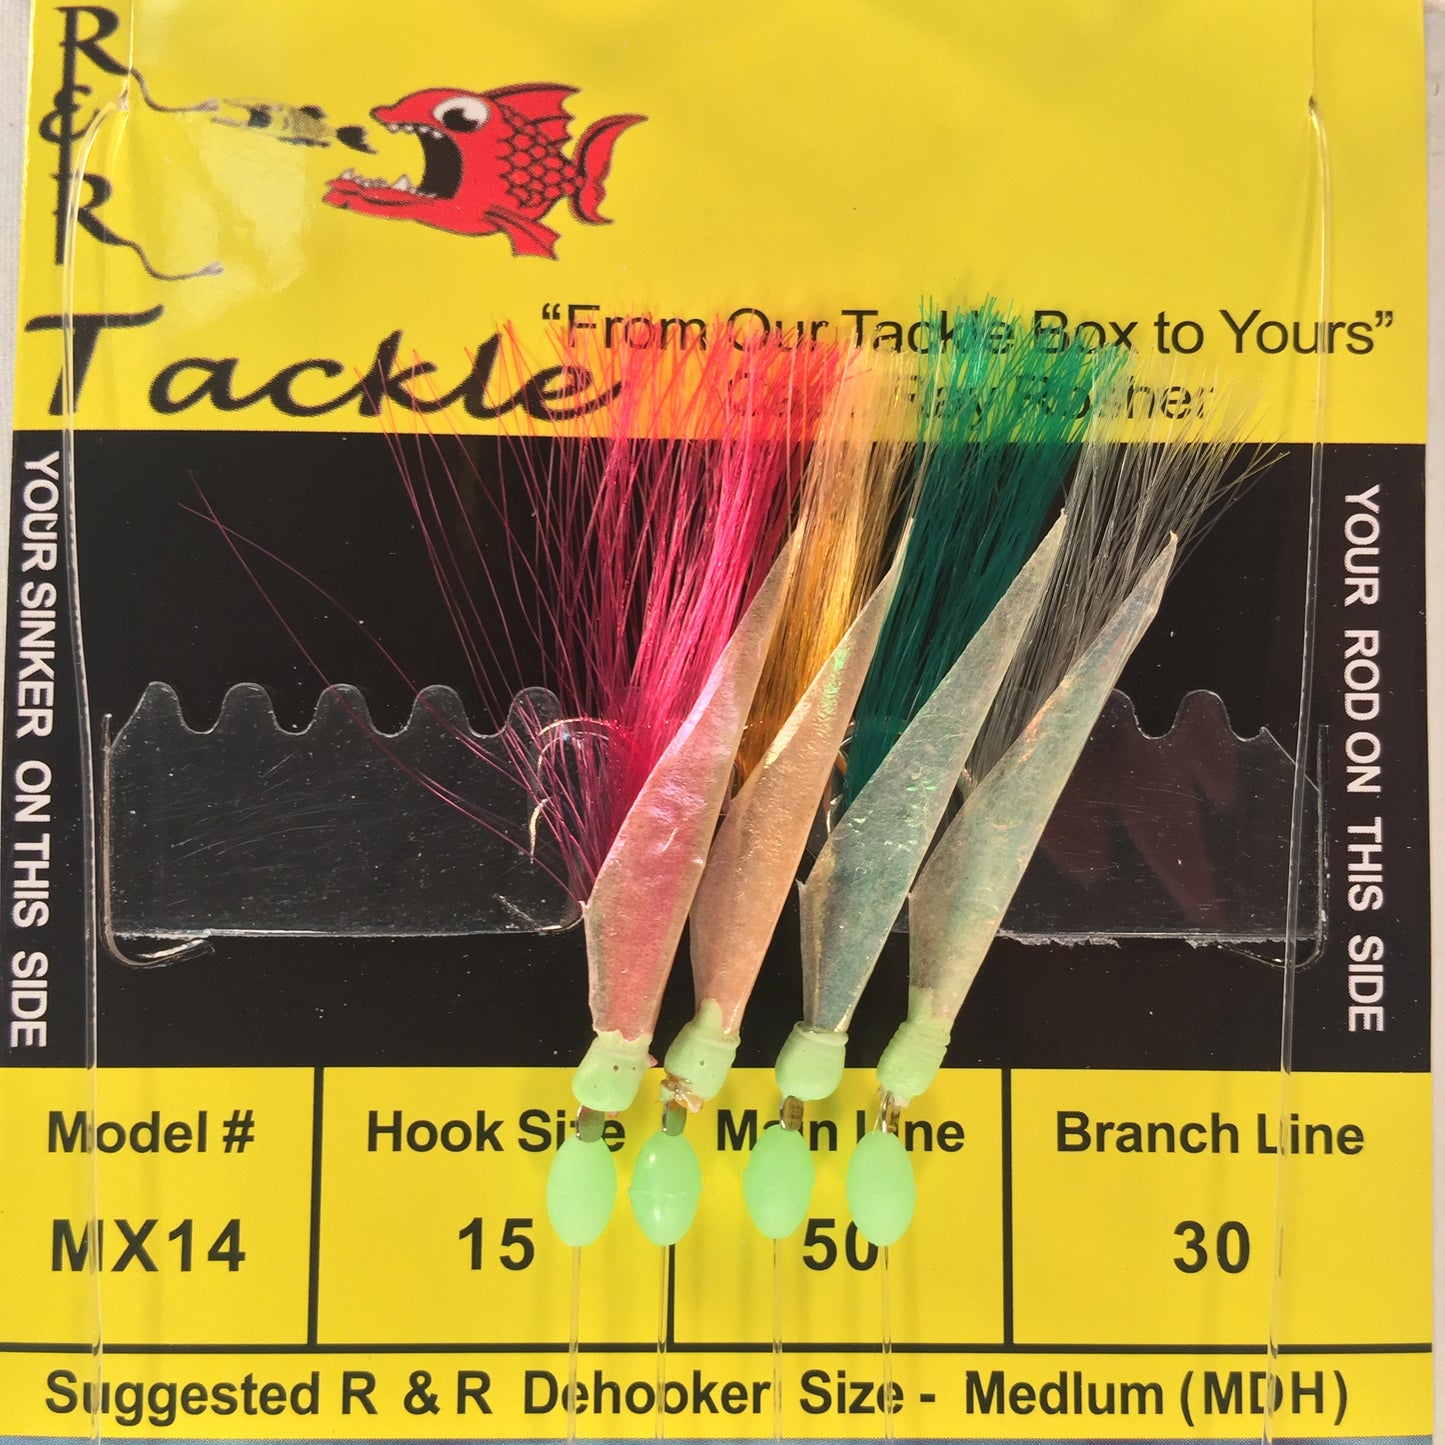 MX14 Bait Rig - 4 (size 15) hooks with multi-color nylon & fish skin